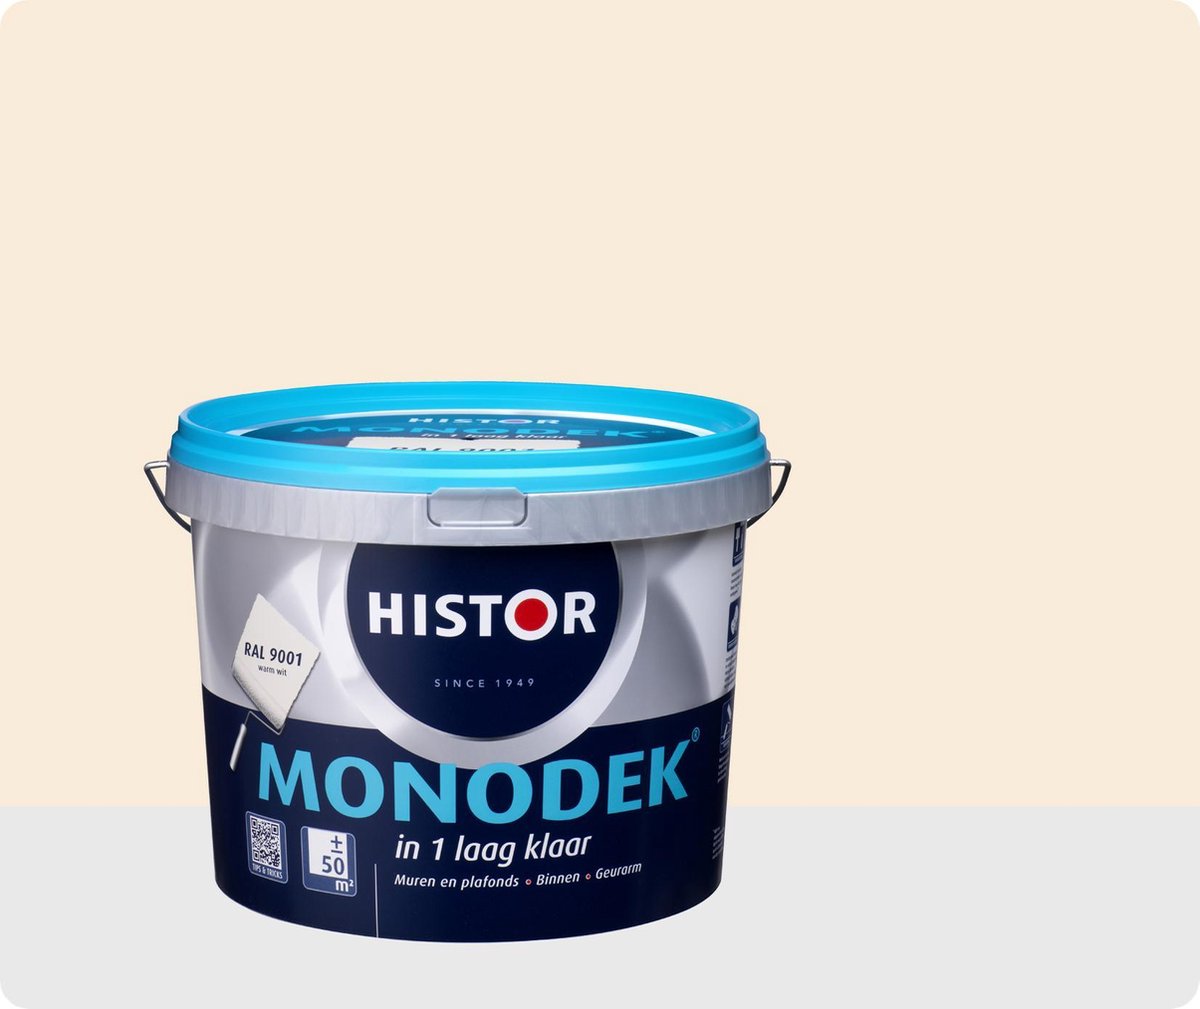 Histor Monodek Muurverf - 5 liter - Warm Wit | bol.com